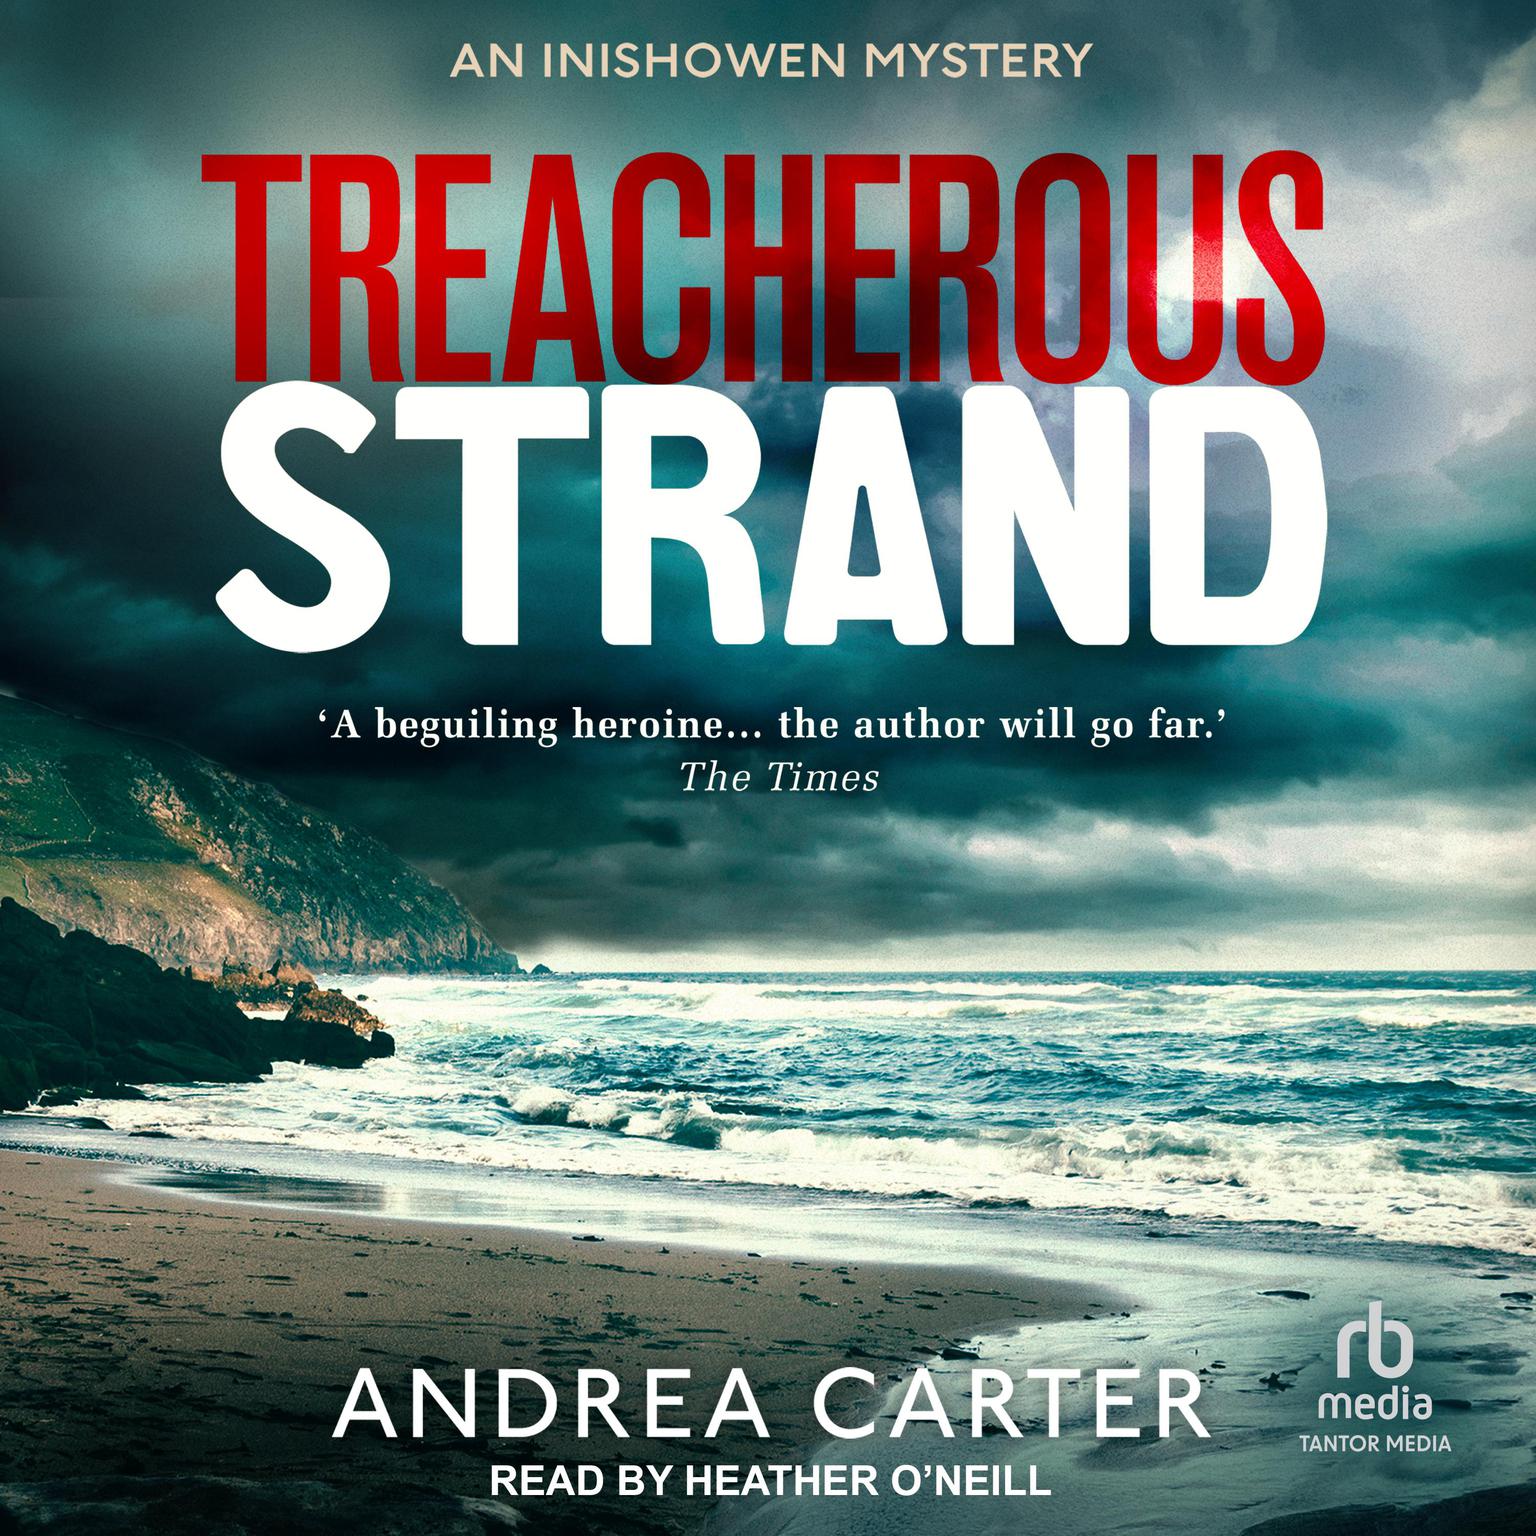 Treacherous Strand Audiobook, by Andrea Carter